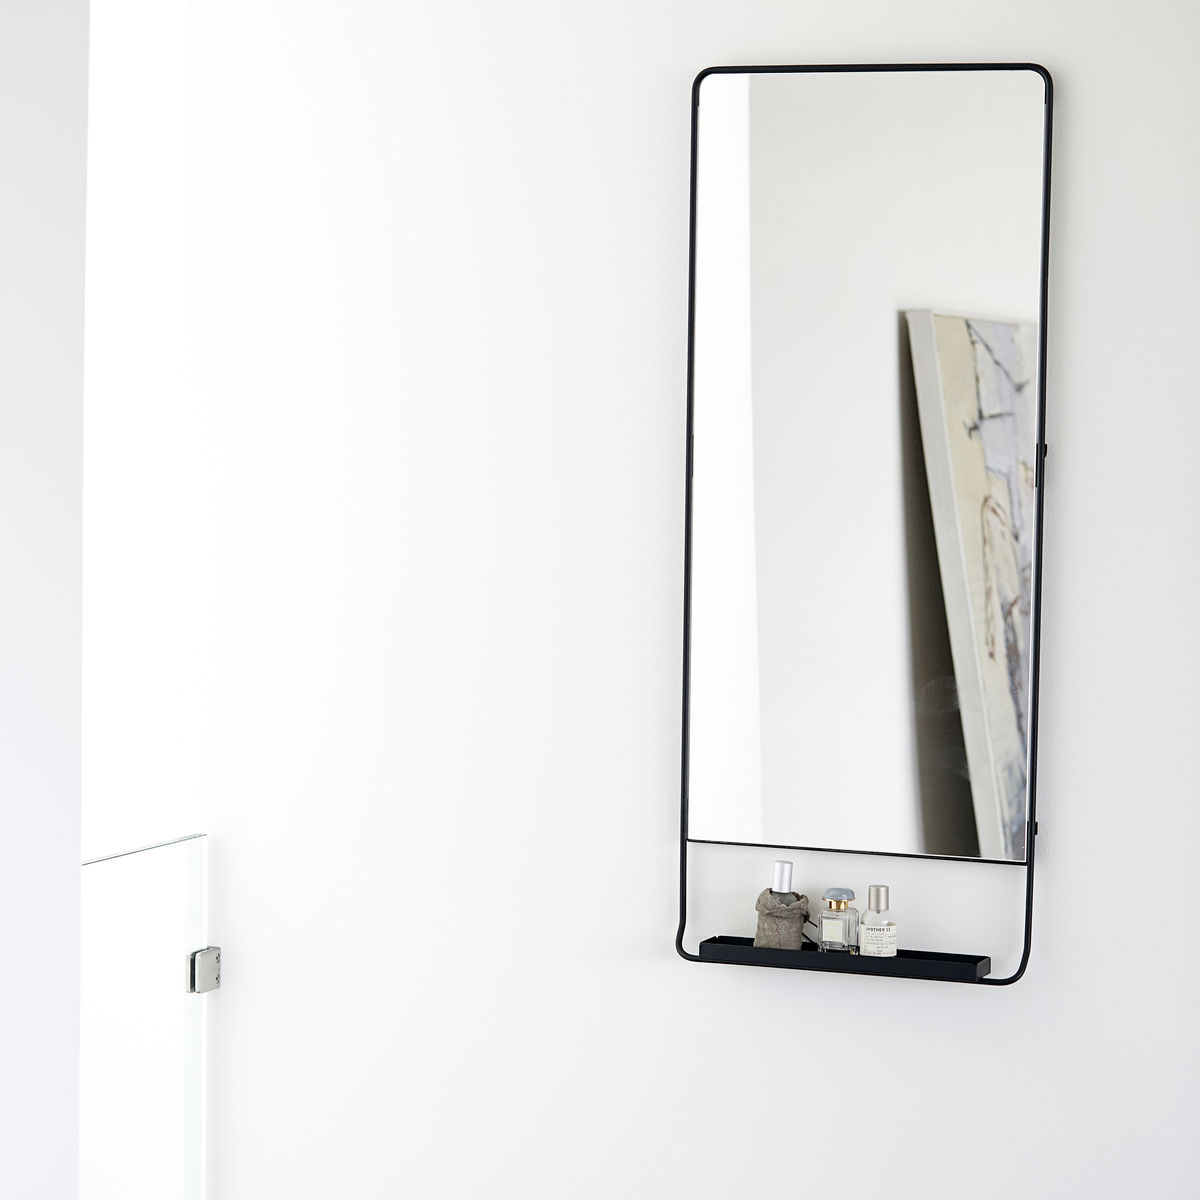 House Doctor - Spegel med hylla, Chic, Svart 45x110 cm